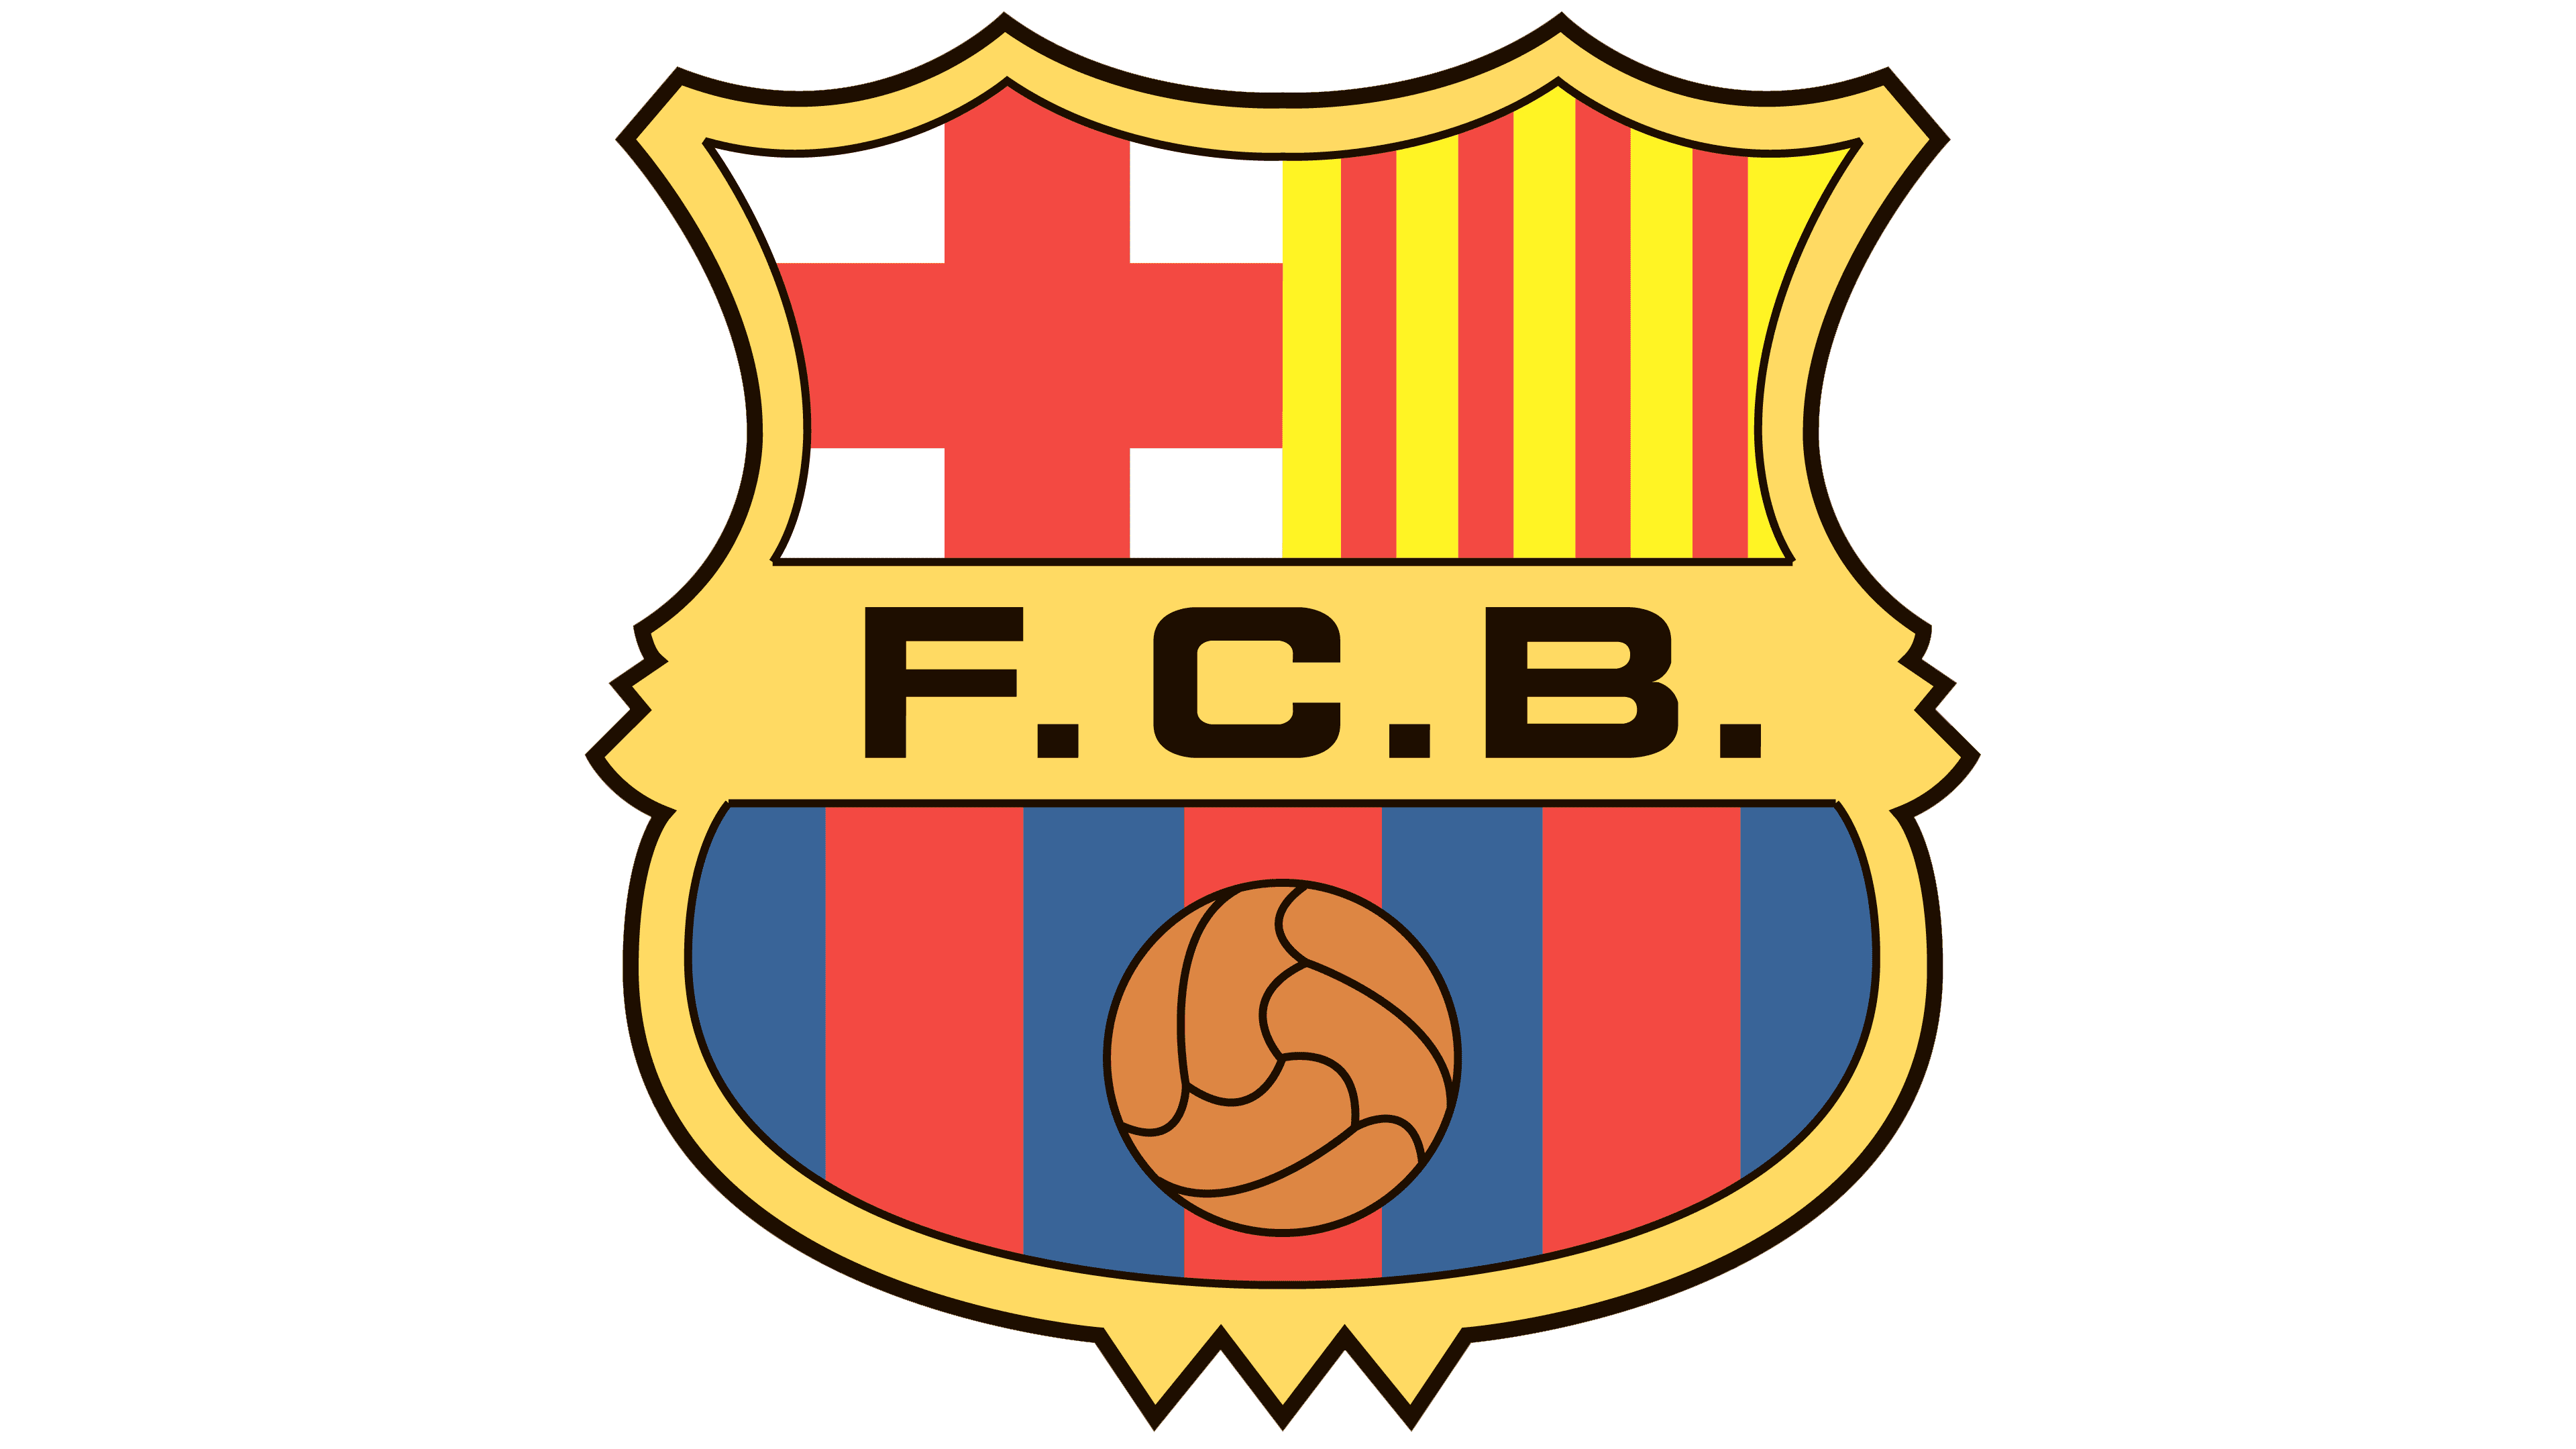 Herb FC Barcelona 1975 - 2002